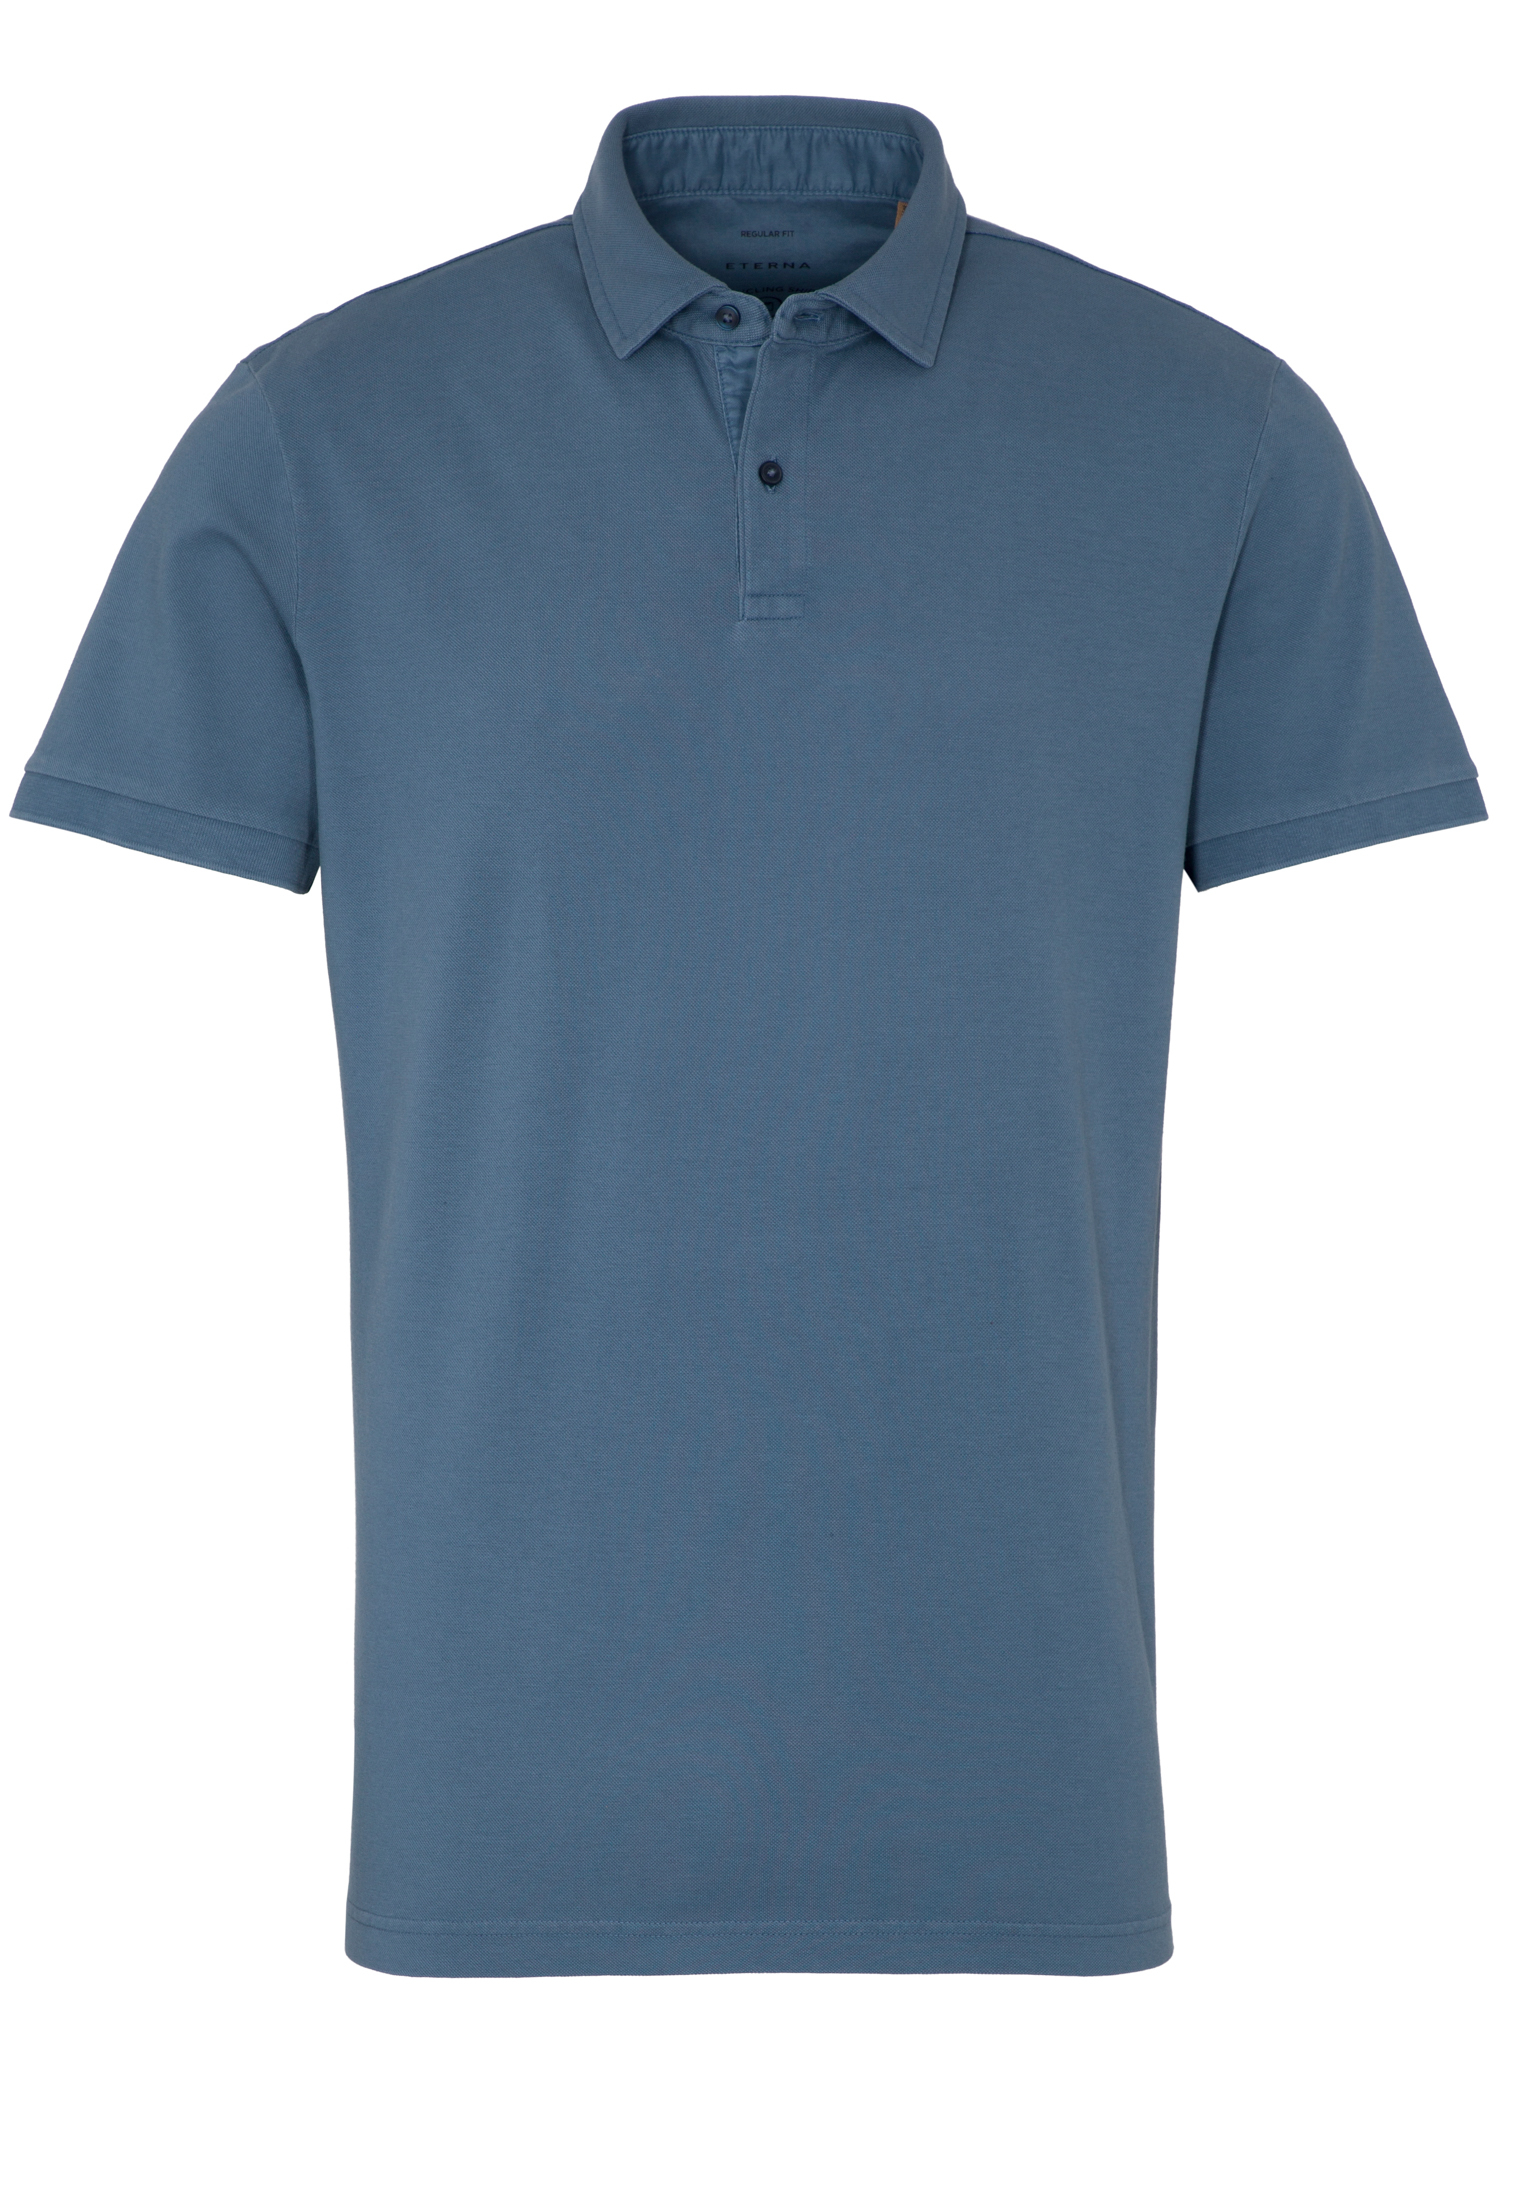 1SP00087-01-41-4XL-1/2 blau Poloshirt | 4XL | | unifarben MODERN FIT in Kurzarm | blau